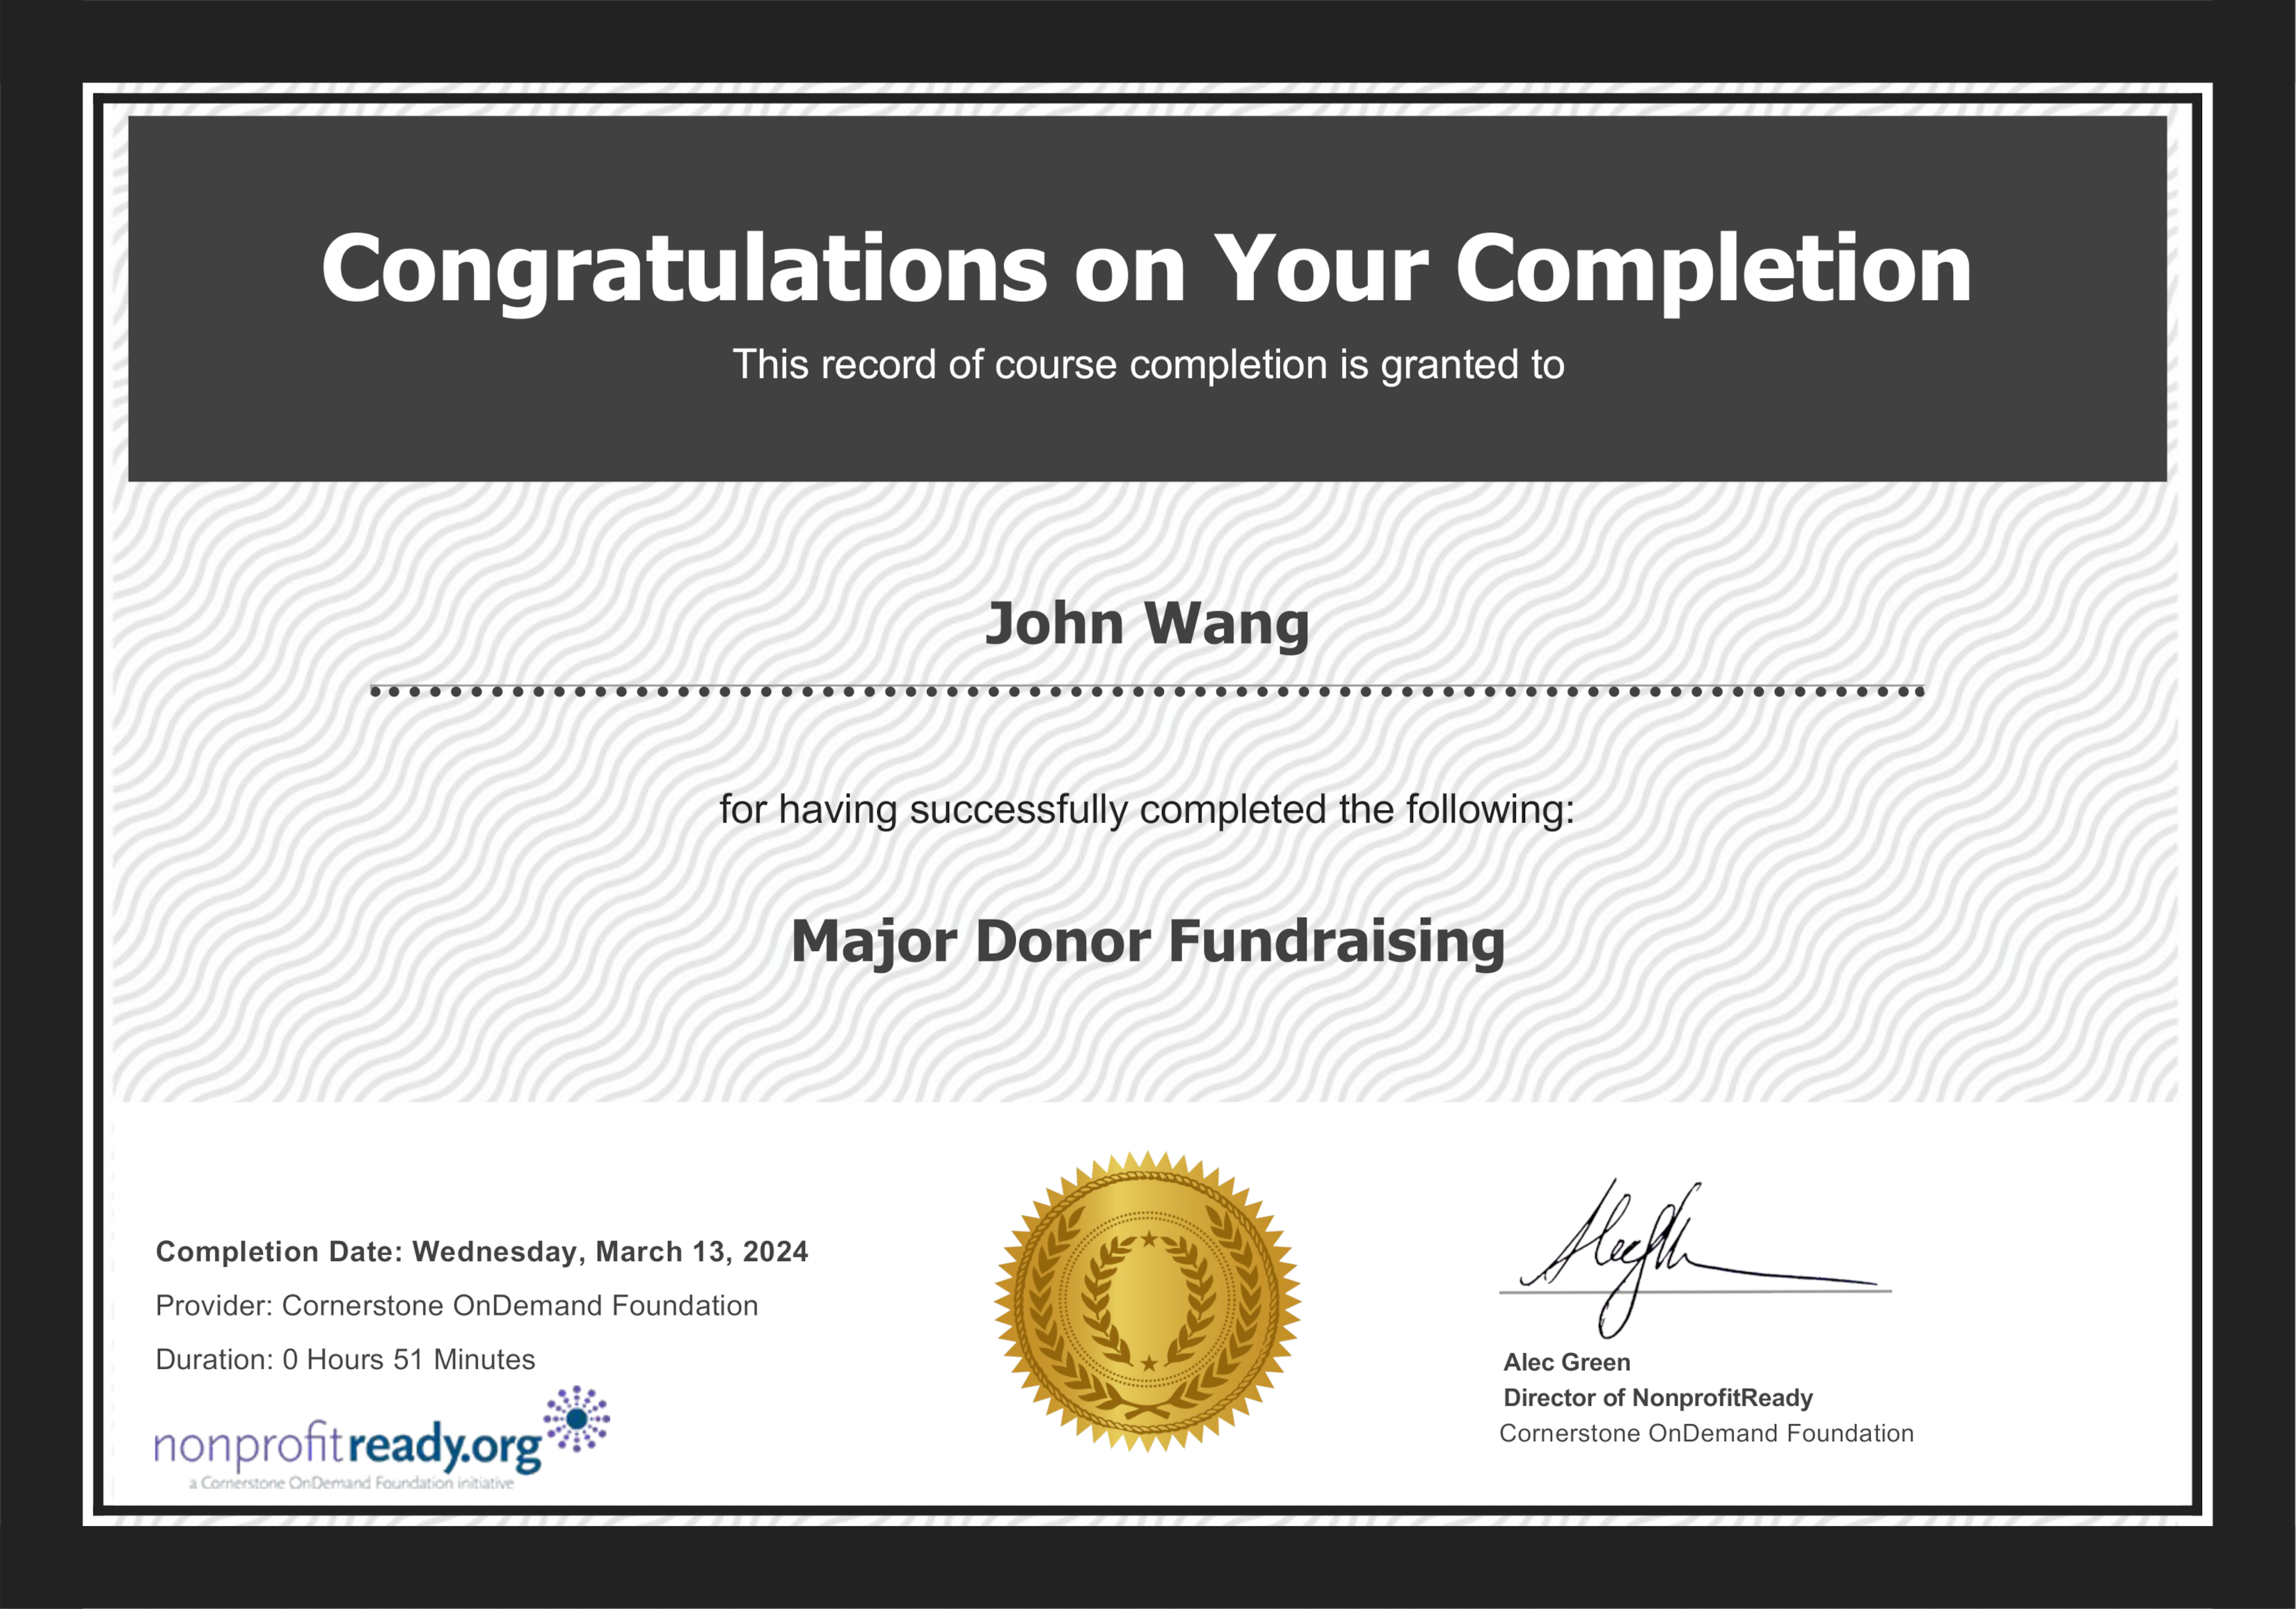 John's Major Donor Fundraising from Cornerstone OnDemand Foundation